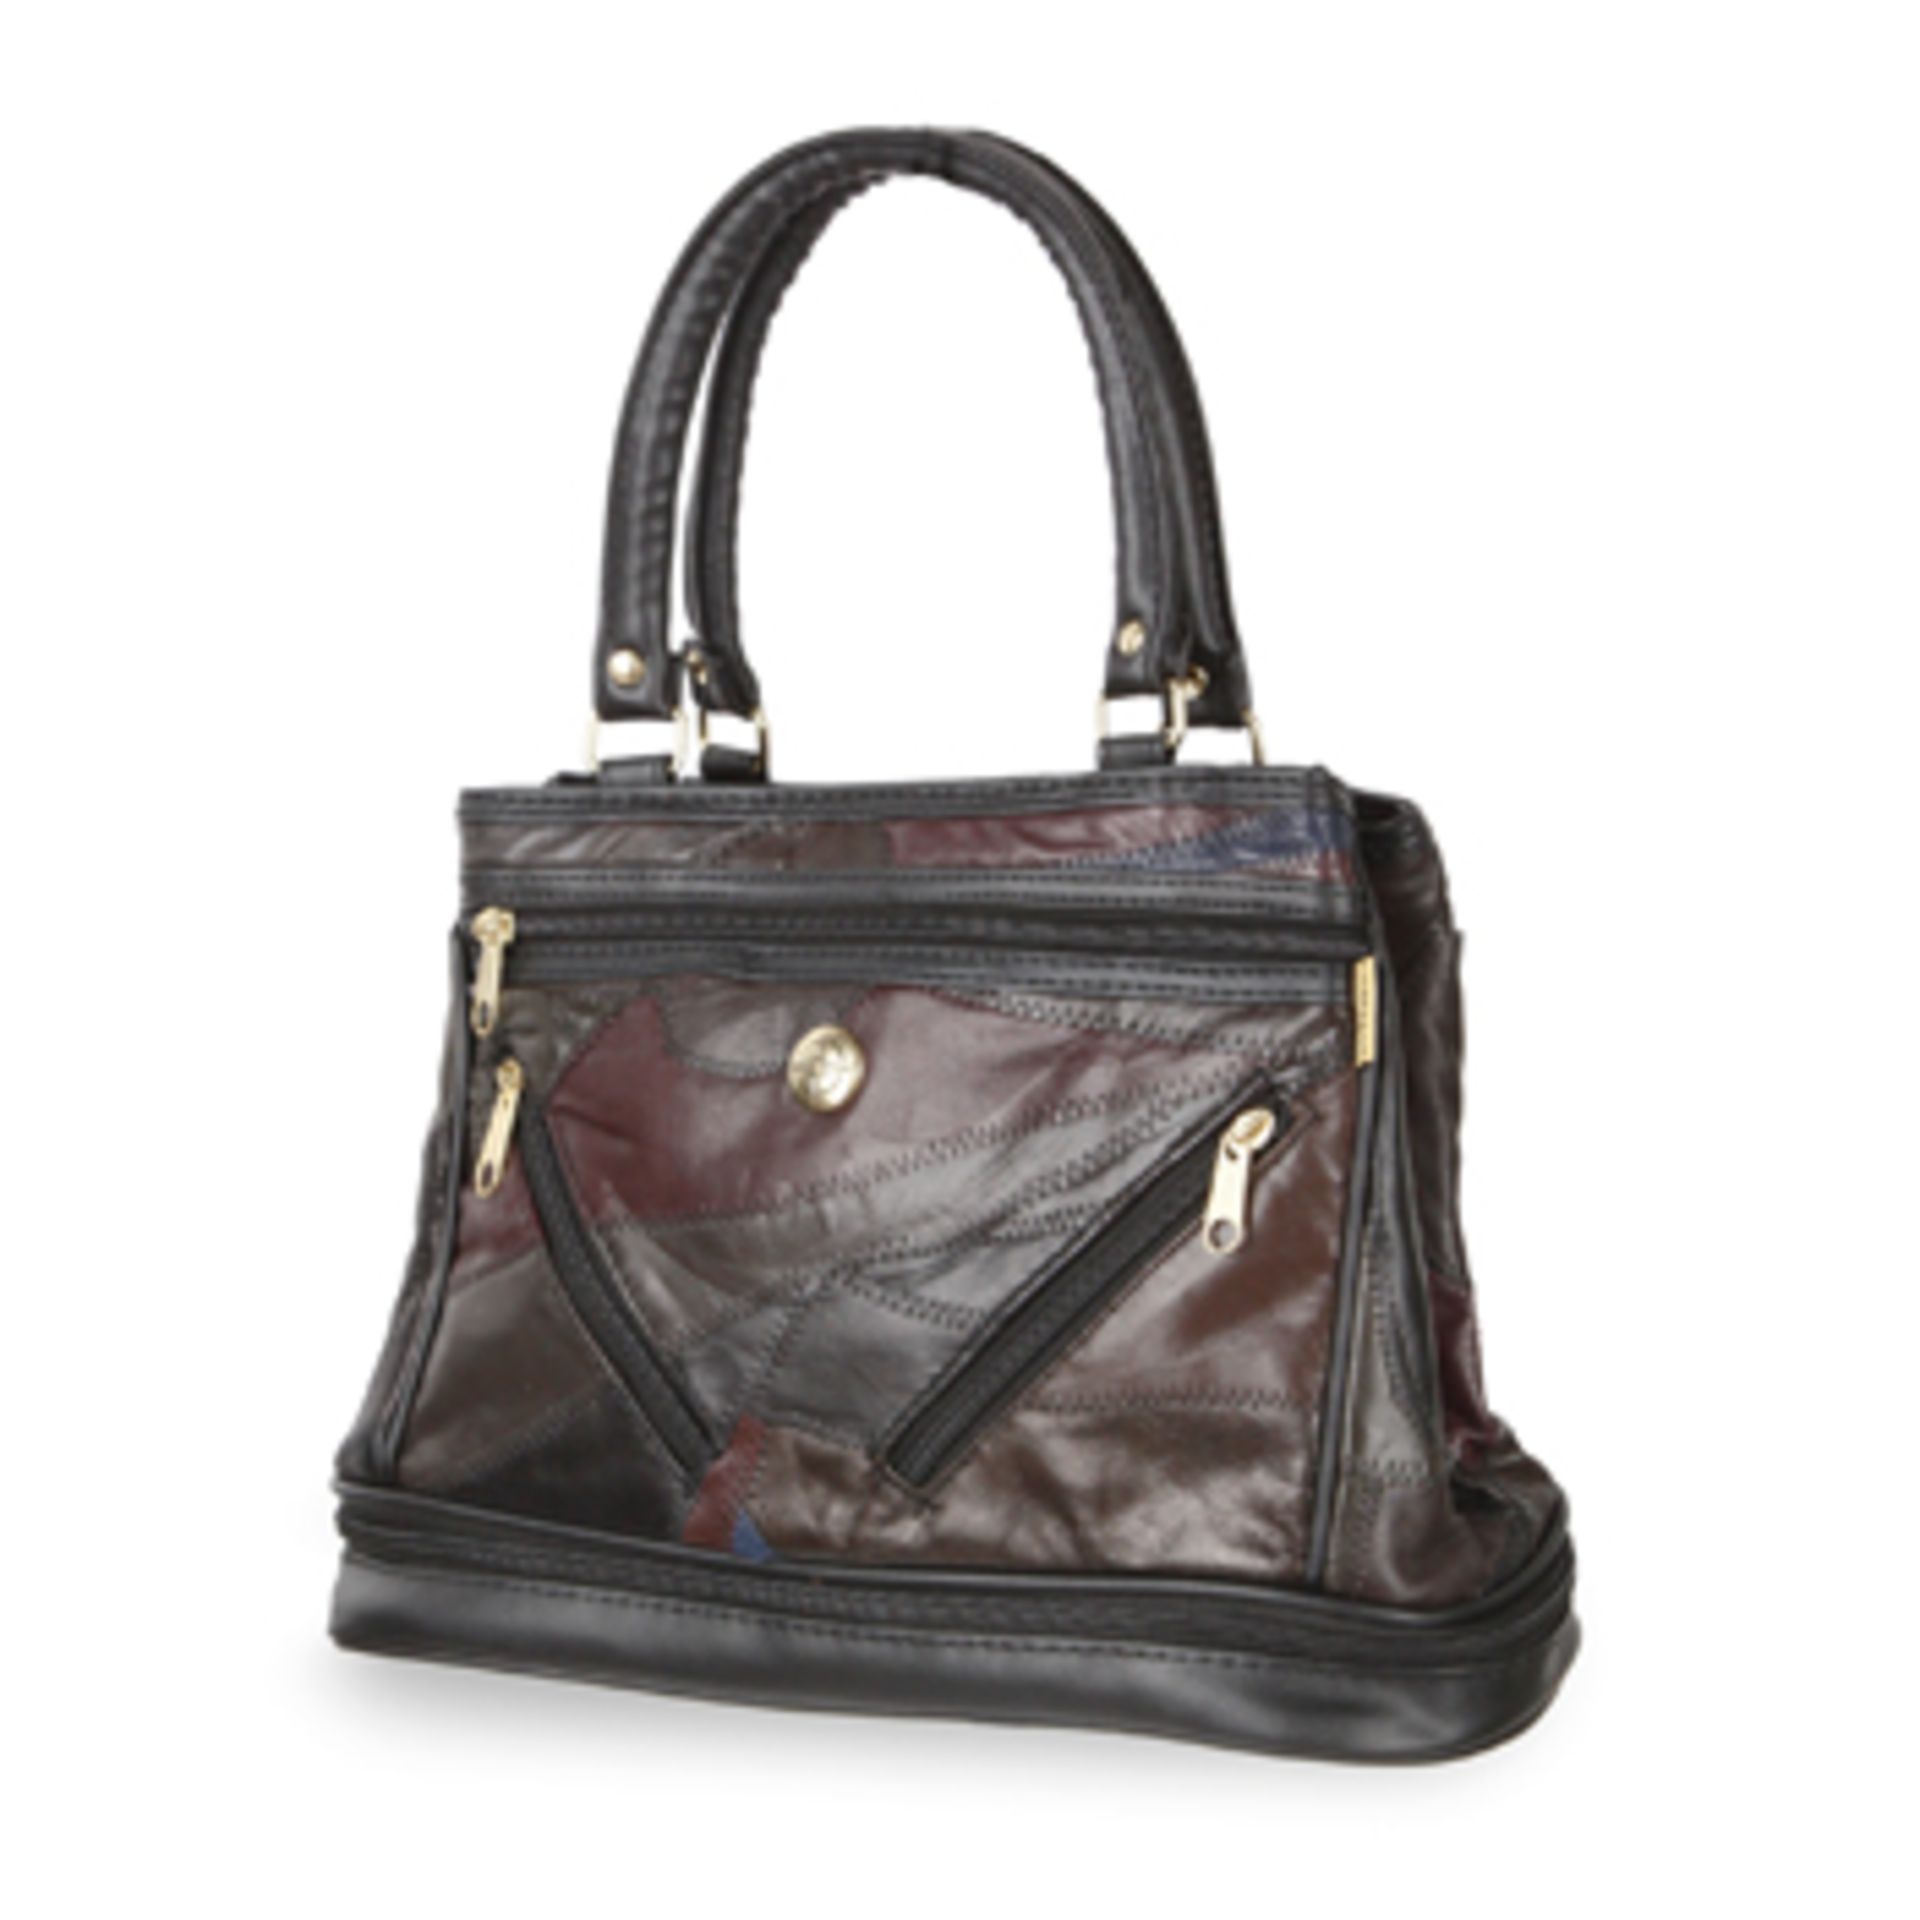 V *TRADE QTY* Brand New Leather Ladies Handbag - Multi-coloured X 4 YOUR BID PRICE TO BE